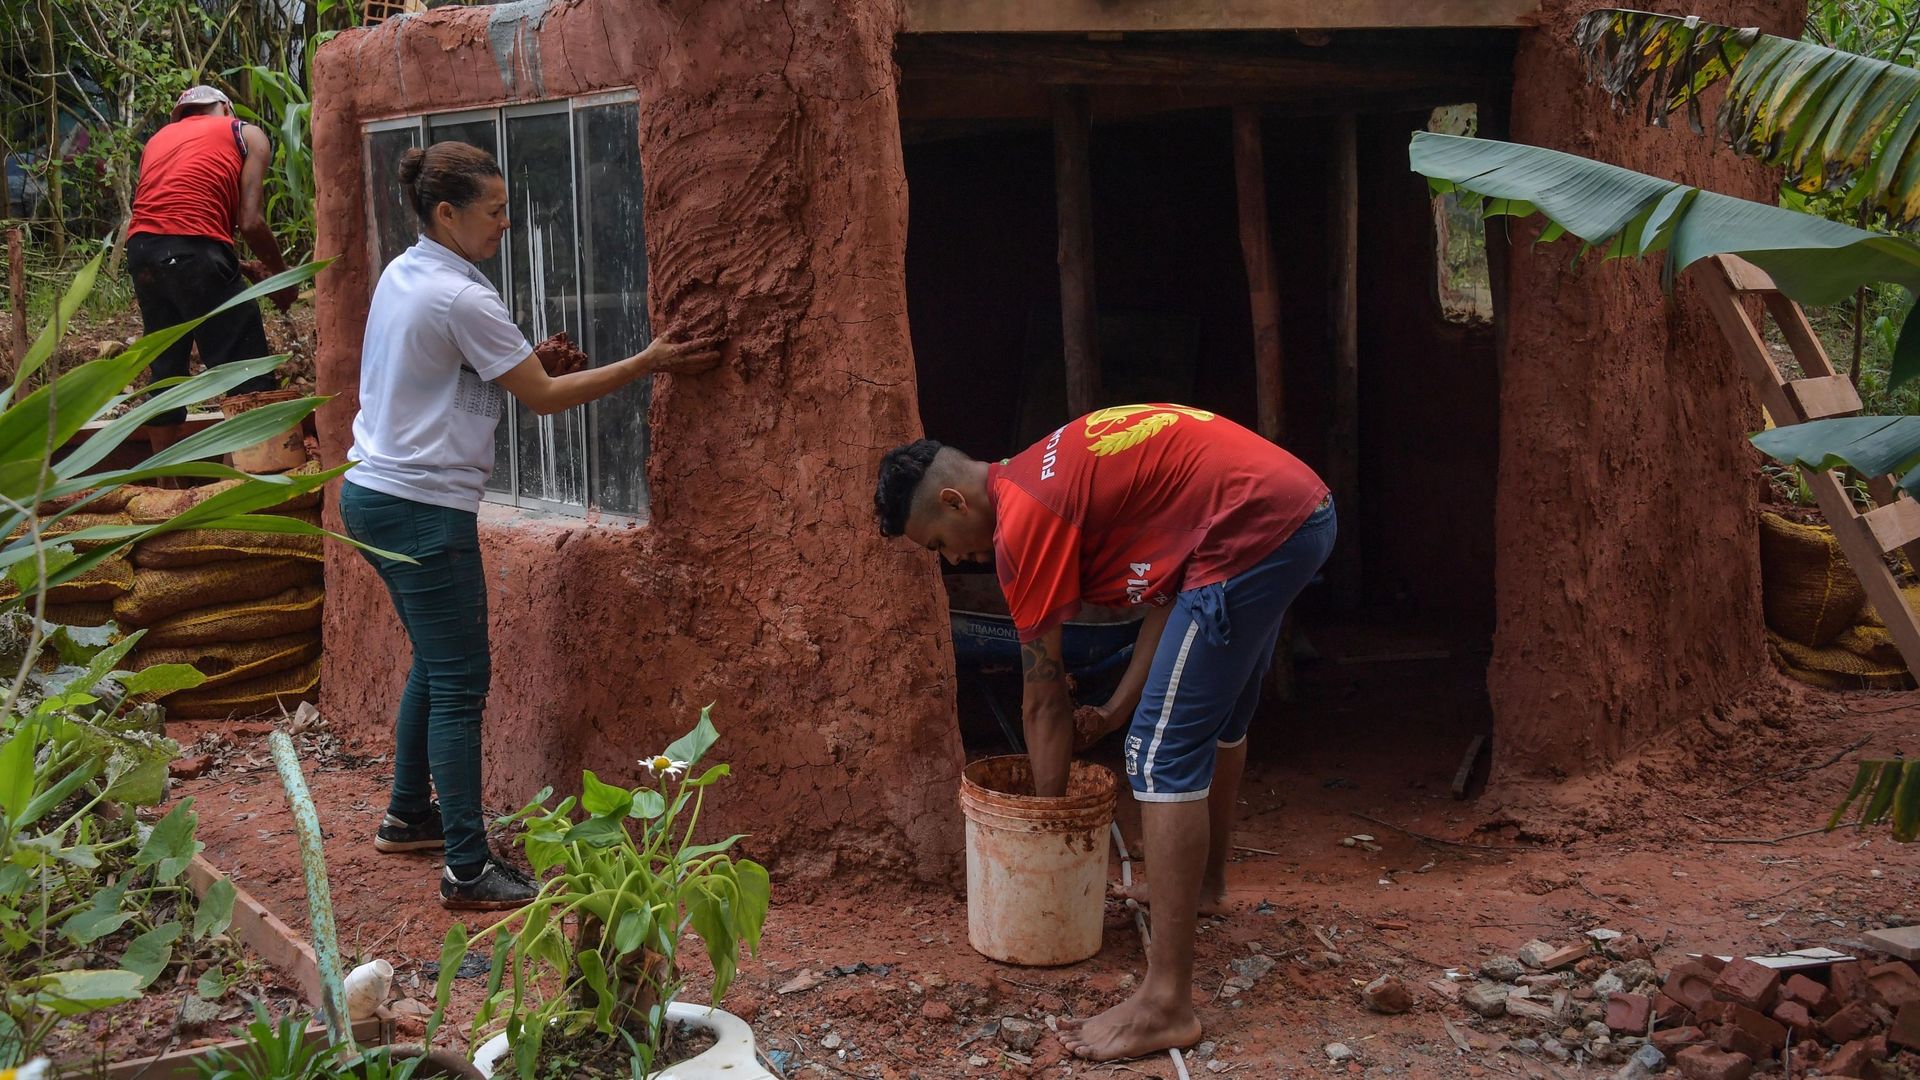 Près de Sao Paulo, la favela verte de "Lia l'espérance"